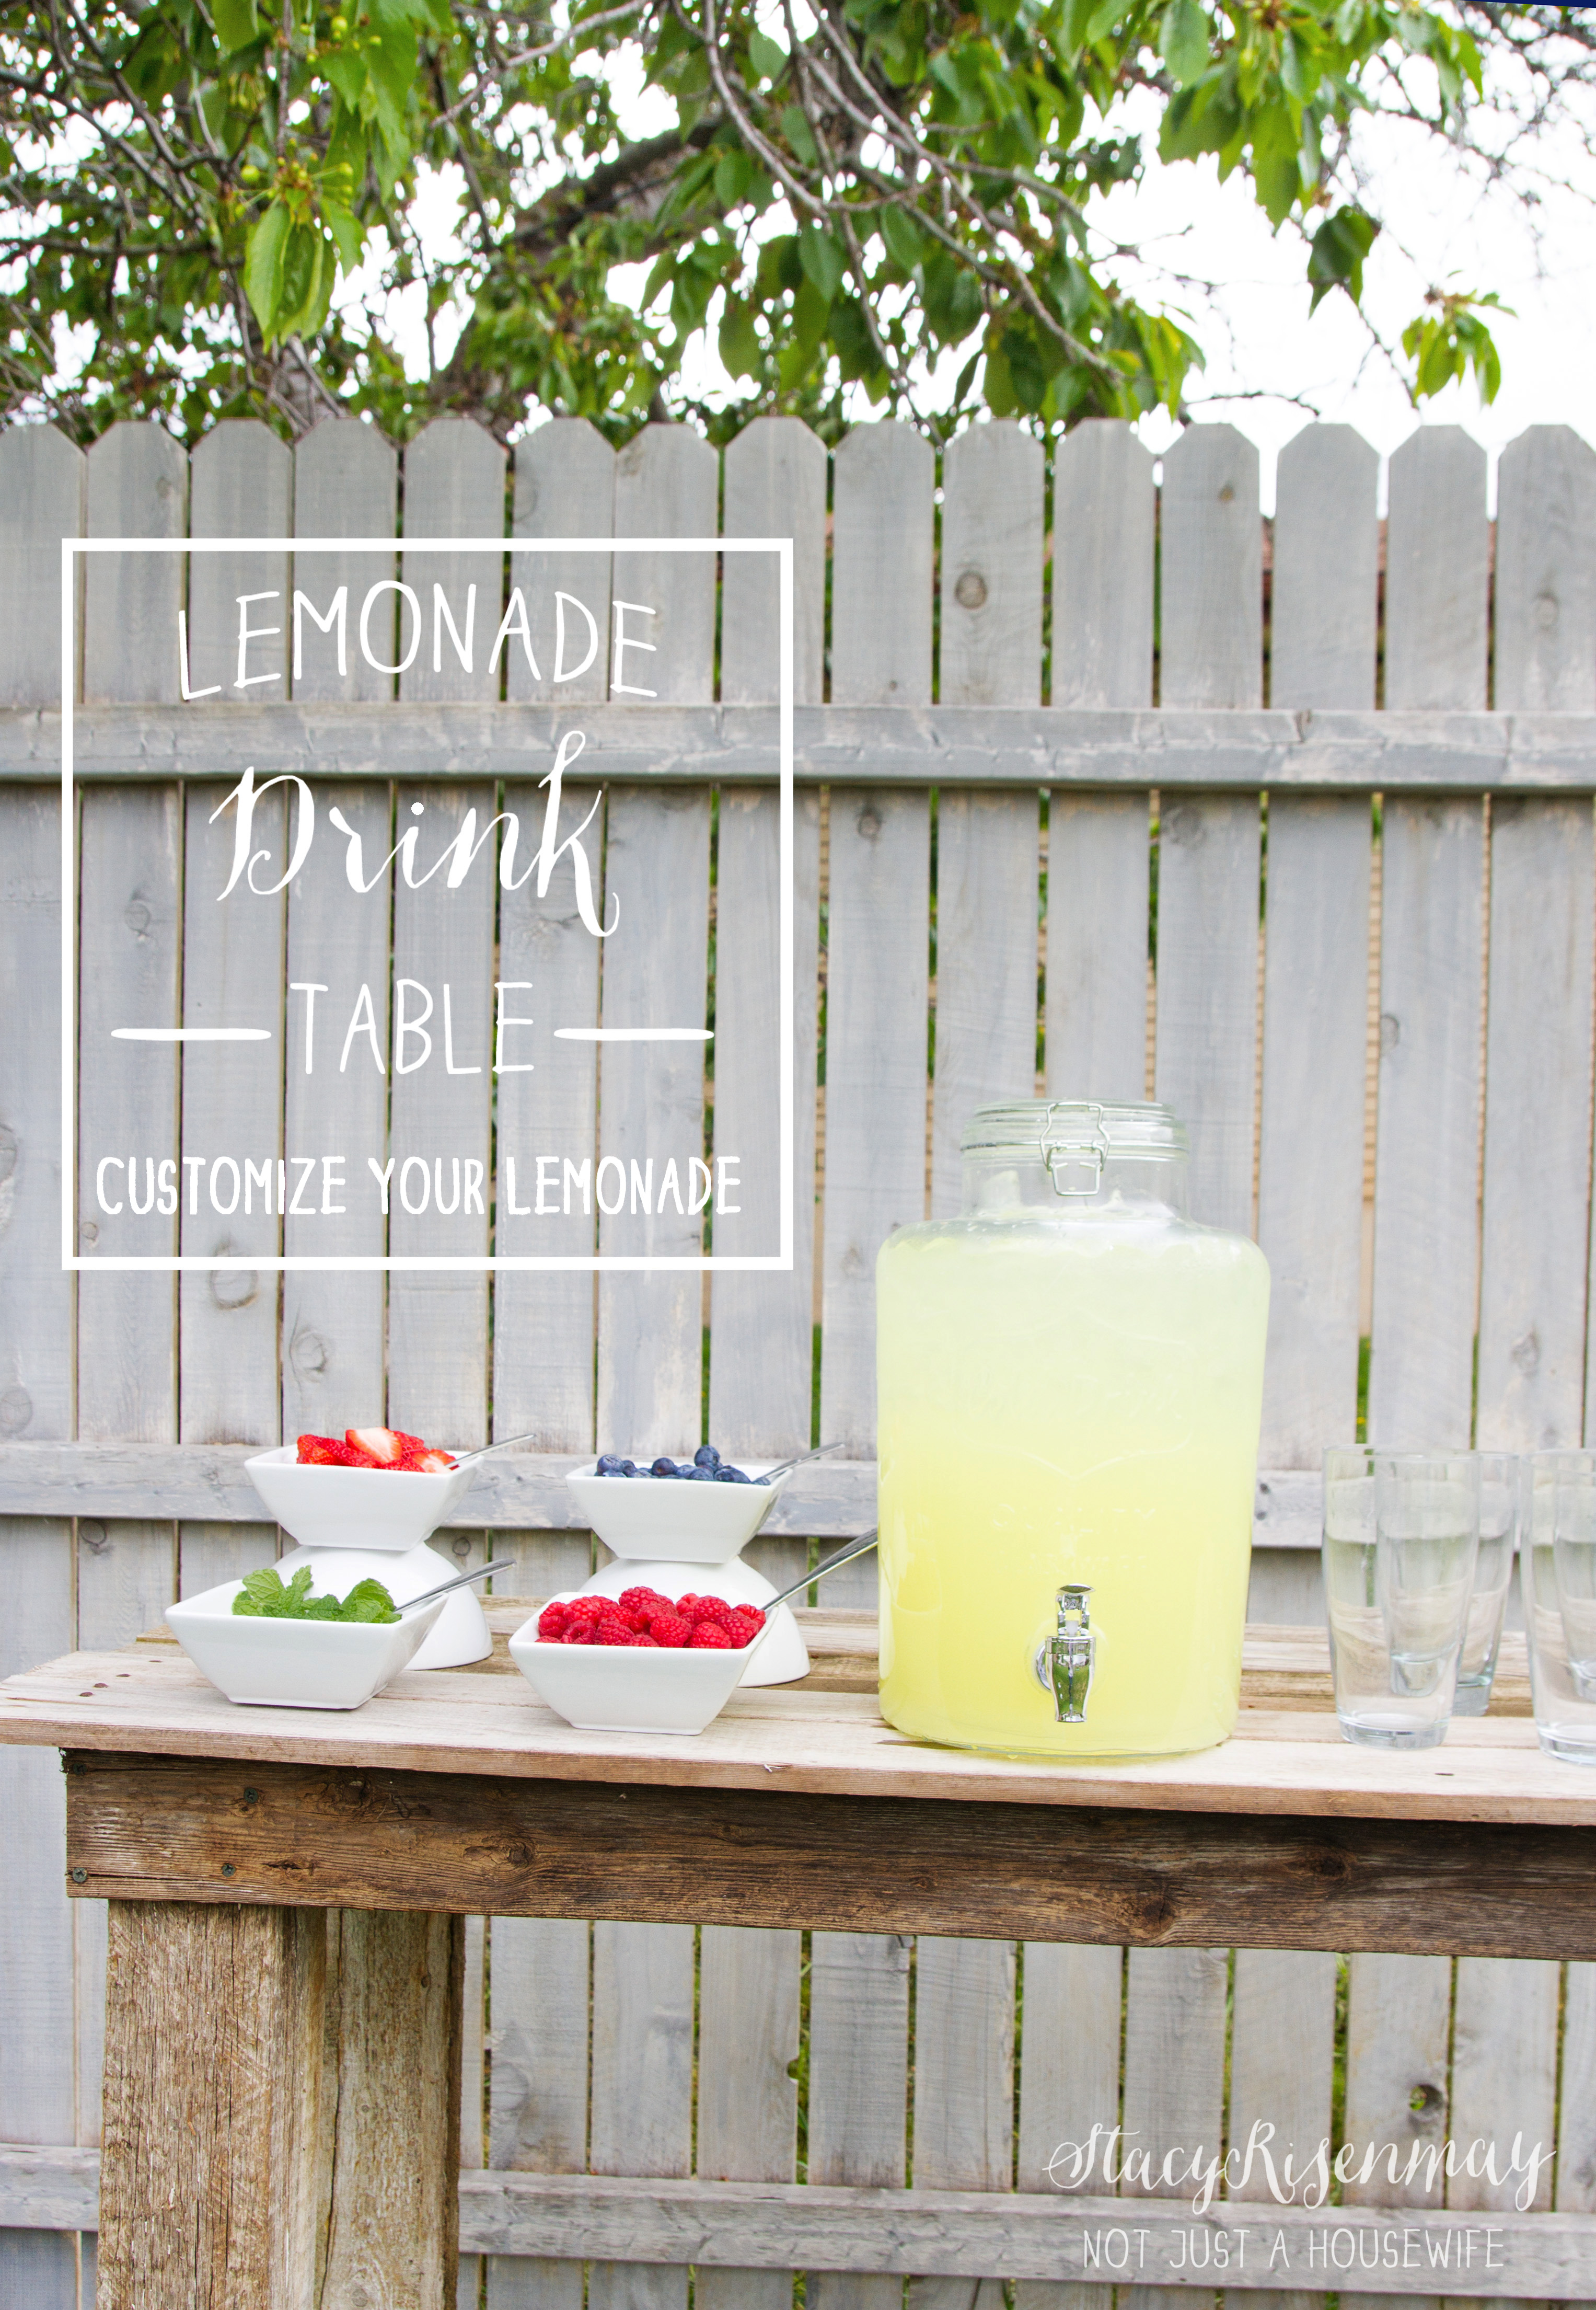 https://www.notjustahousewife.net/wp-content/uploads/2015/05/lemonade-drink-table_edited-2.jpg